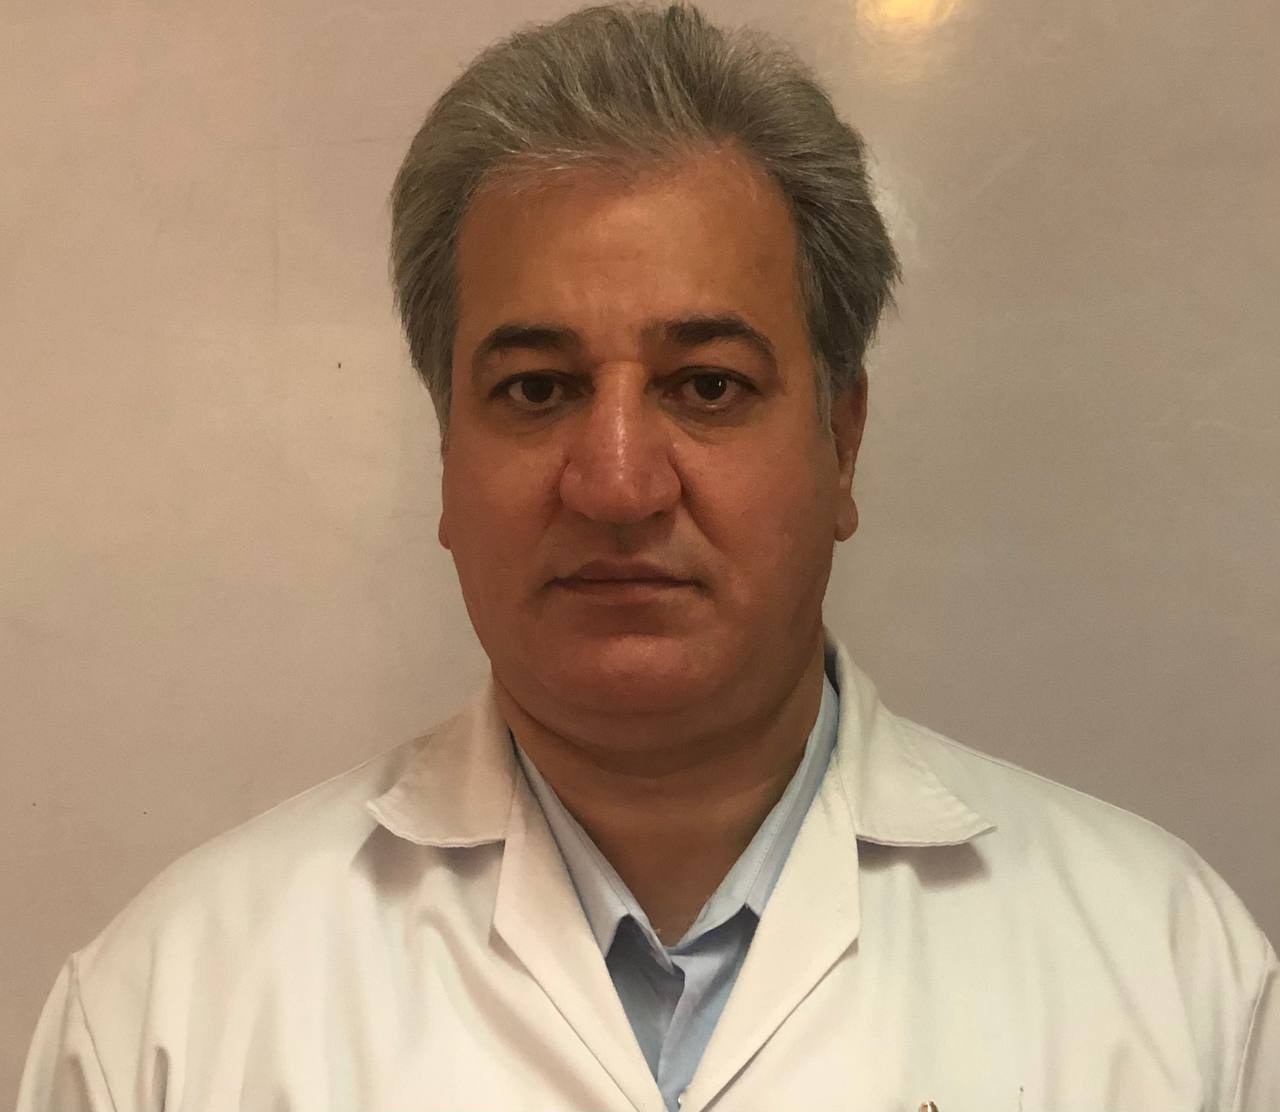 دکتر رحیمپور امیری